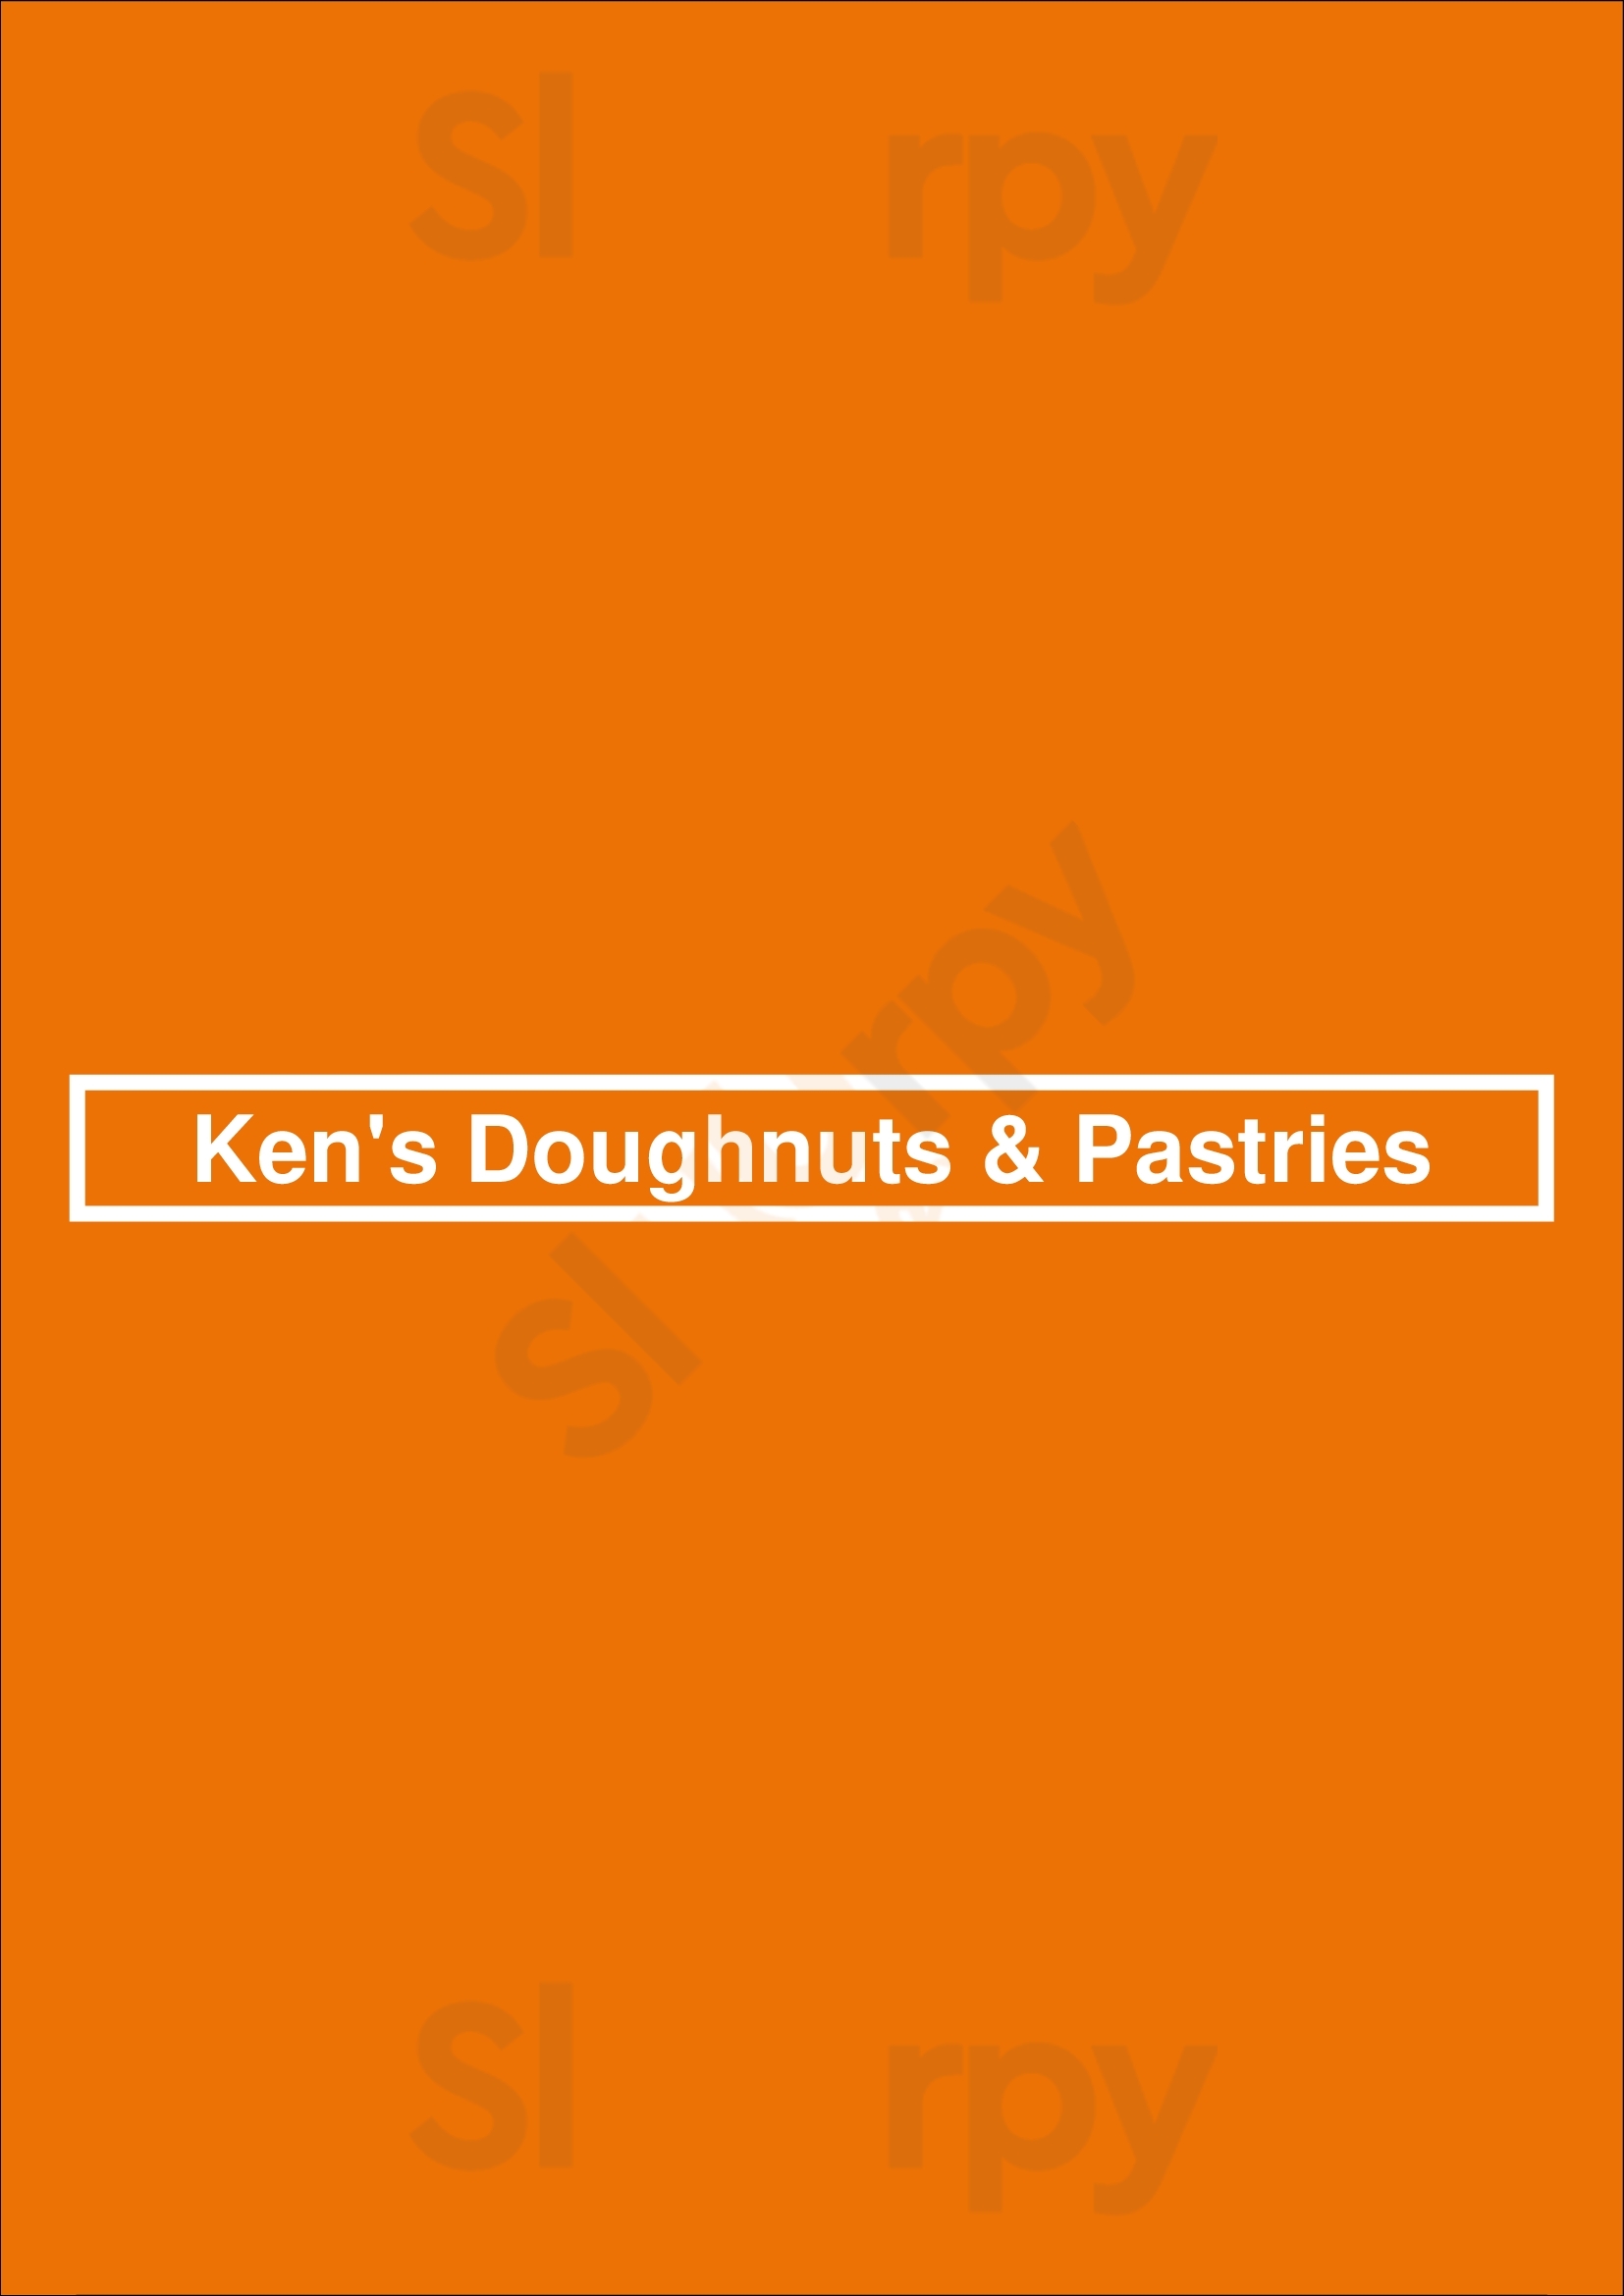 Ken's Doughnuts & Pastries Austin Menu - 1